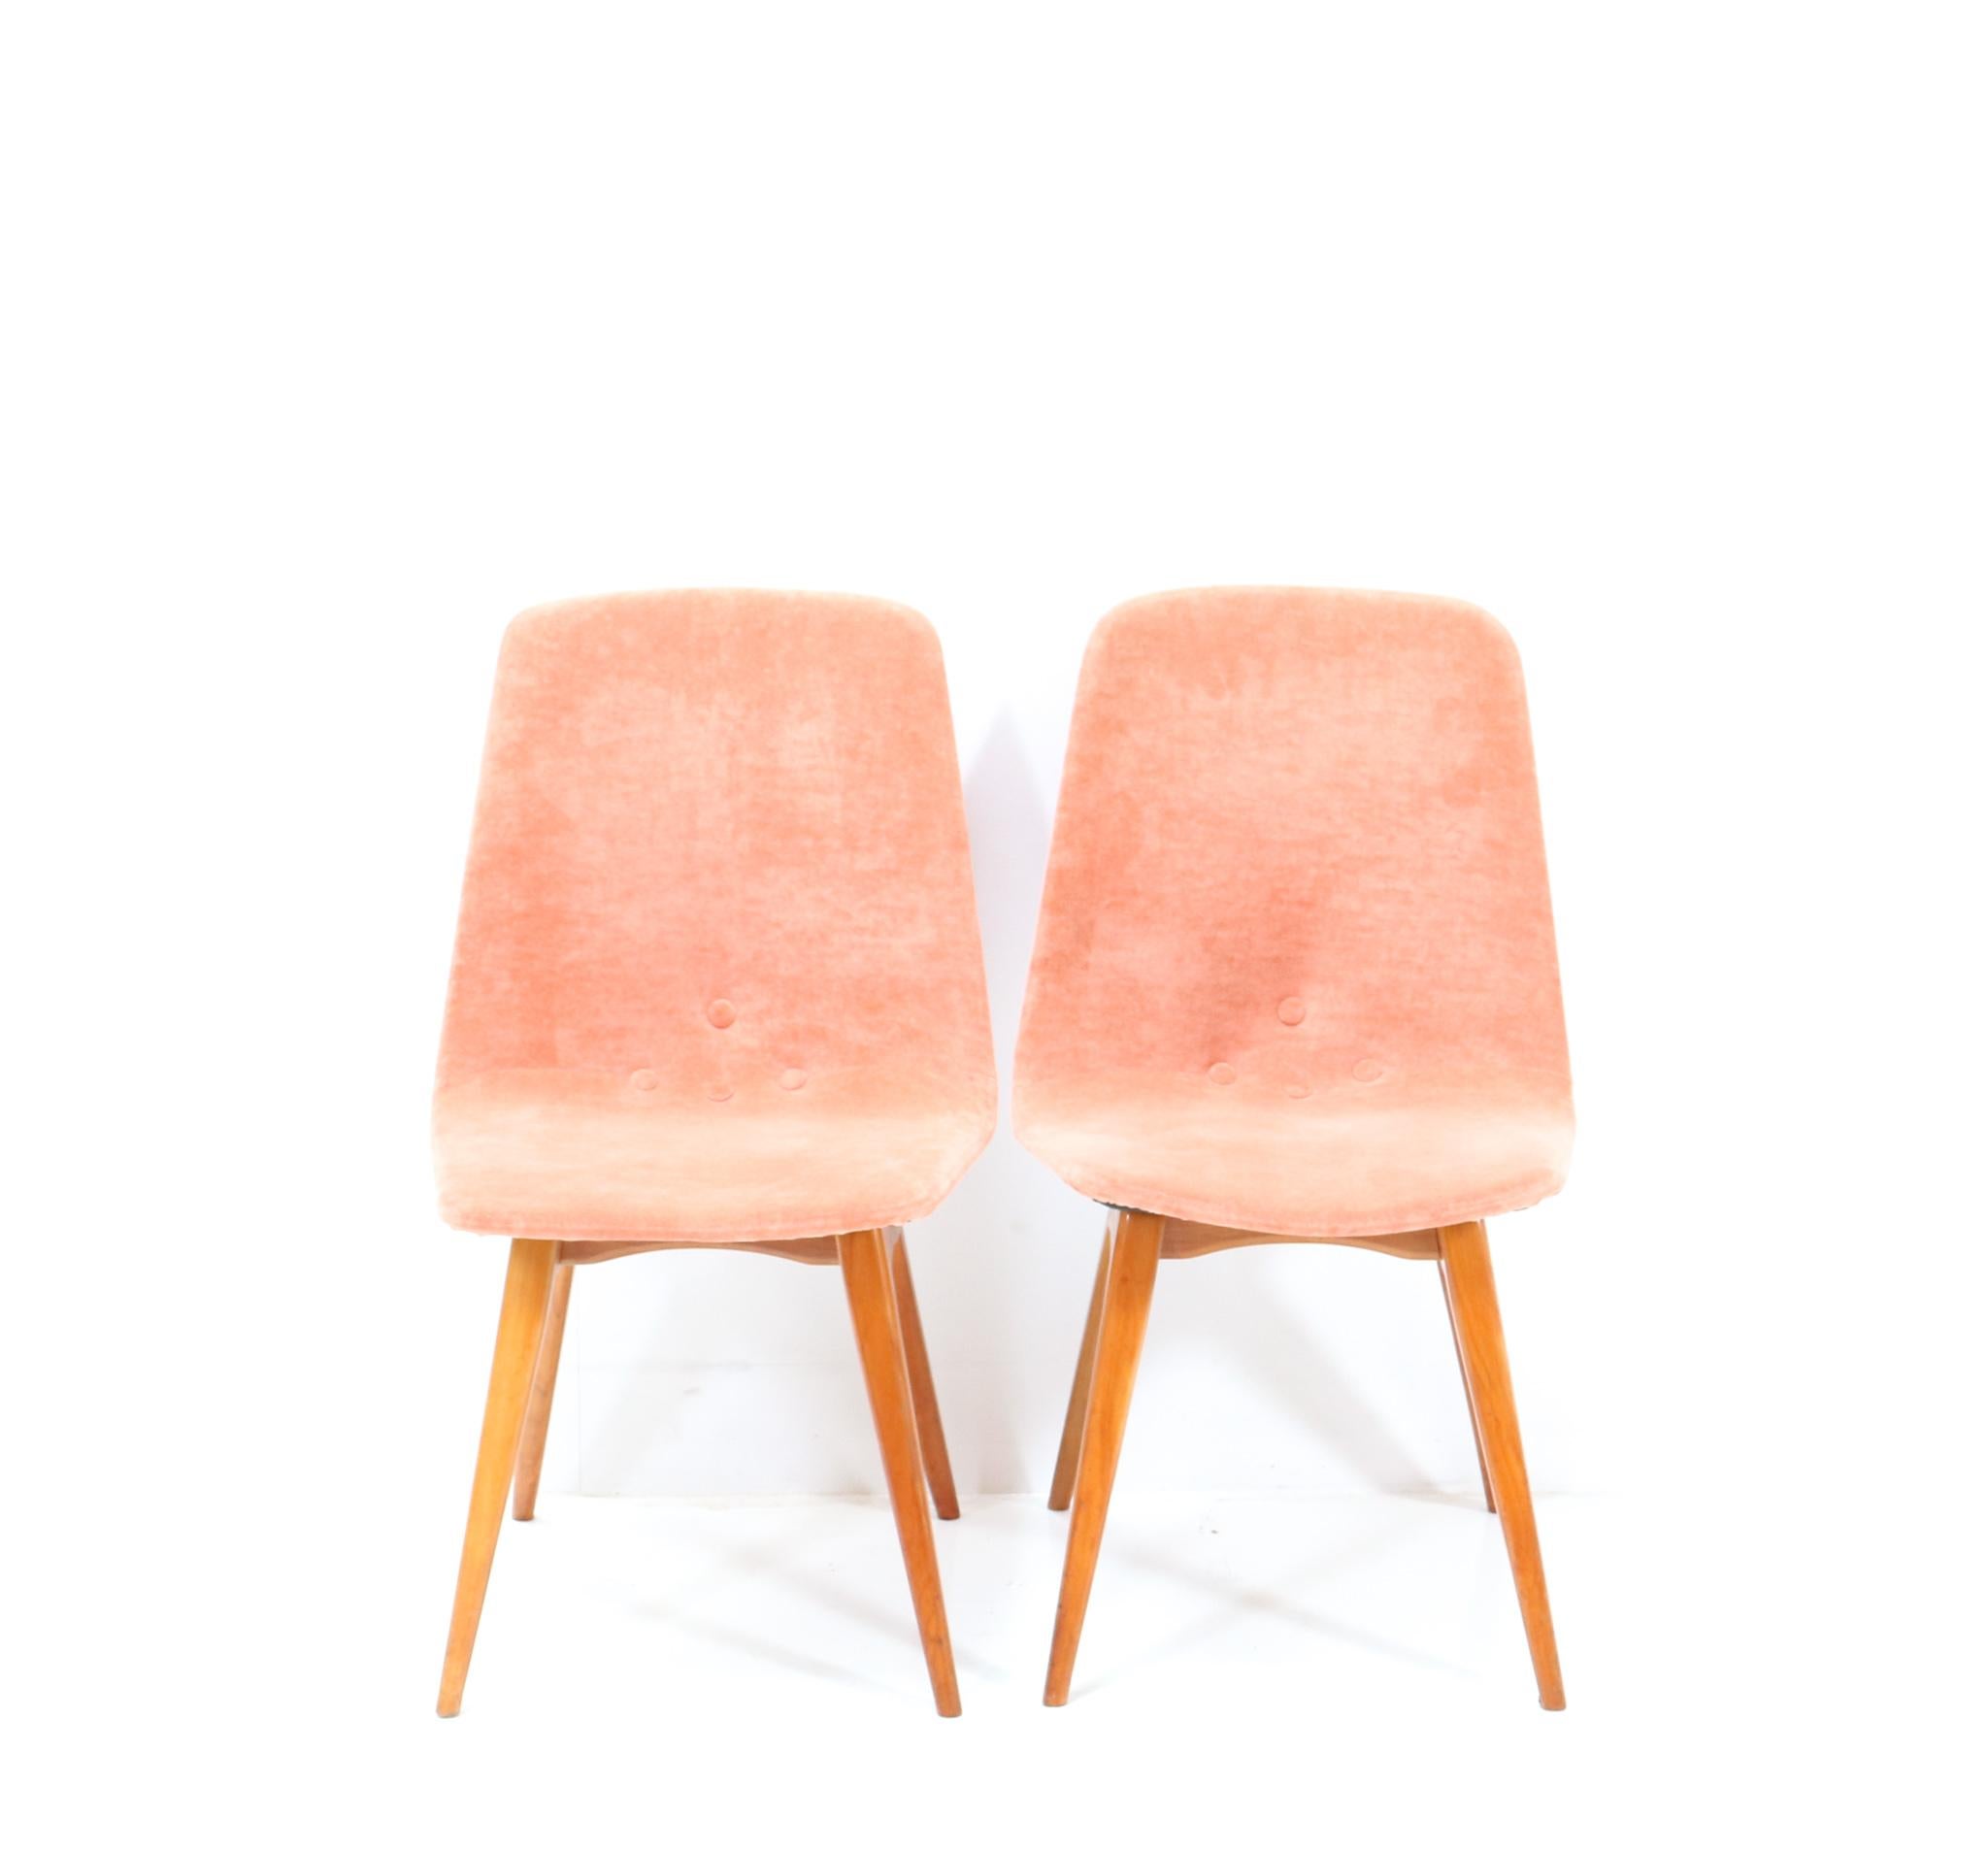 Stunning set of two Mid-Century Modern Model Swing dining room chairs.
Design by G. Van Os for Meubelfabriek G.J. Van Os N.V. Culemborg.
Striking Dutch design from the 1950s.
Solid cherry frame with later salmon velvet upholstery.
Amazing design